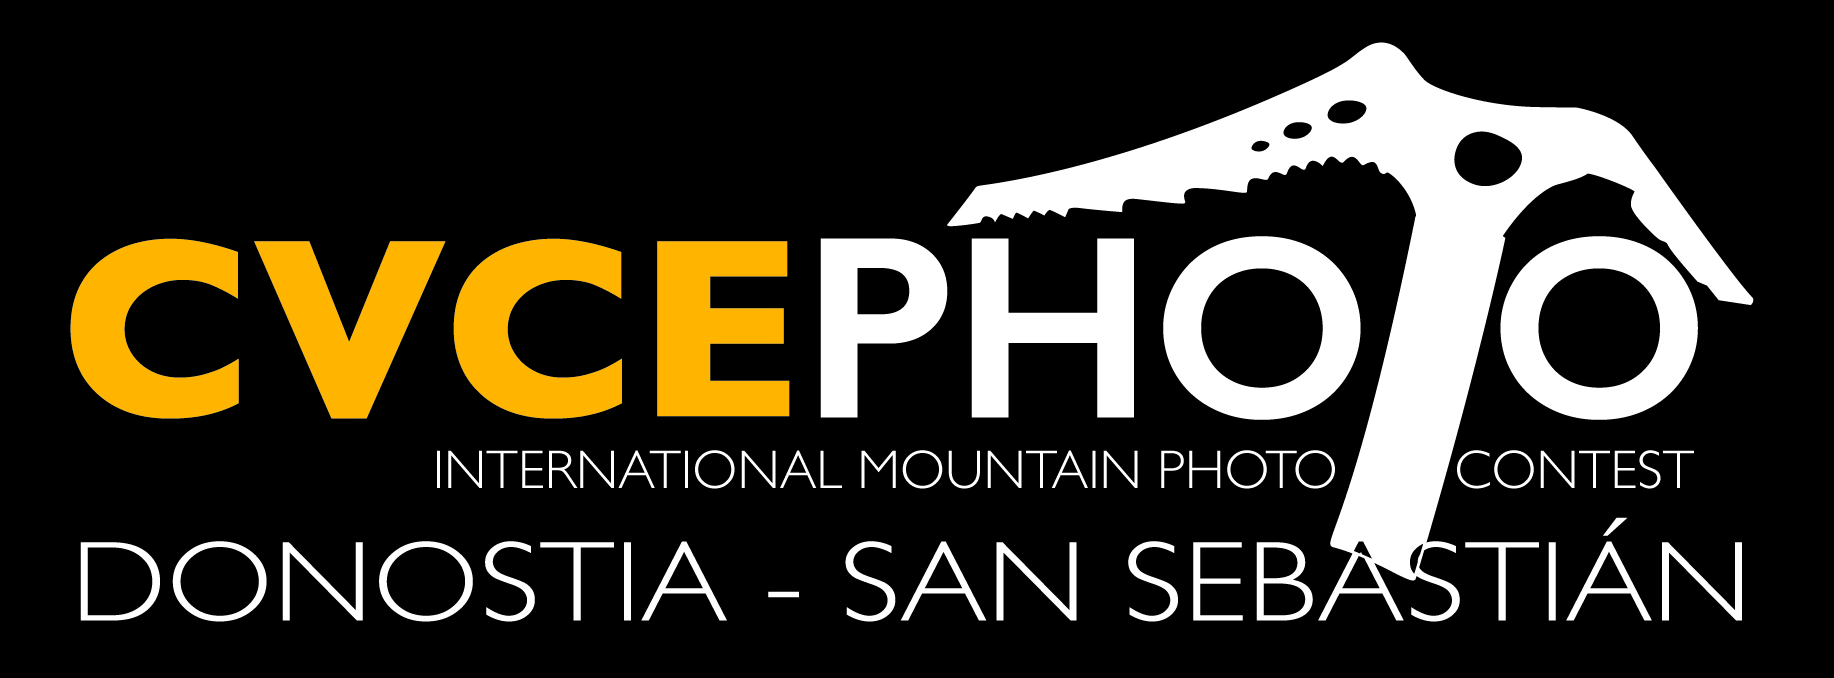 International Mountain Photo Contest